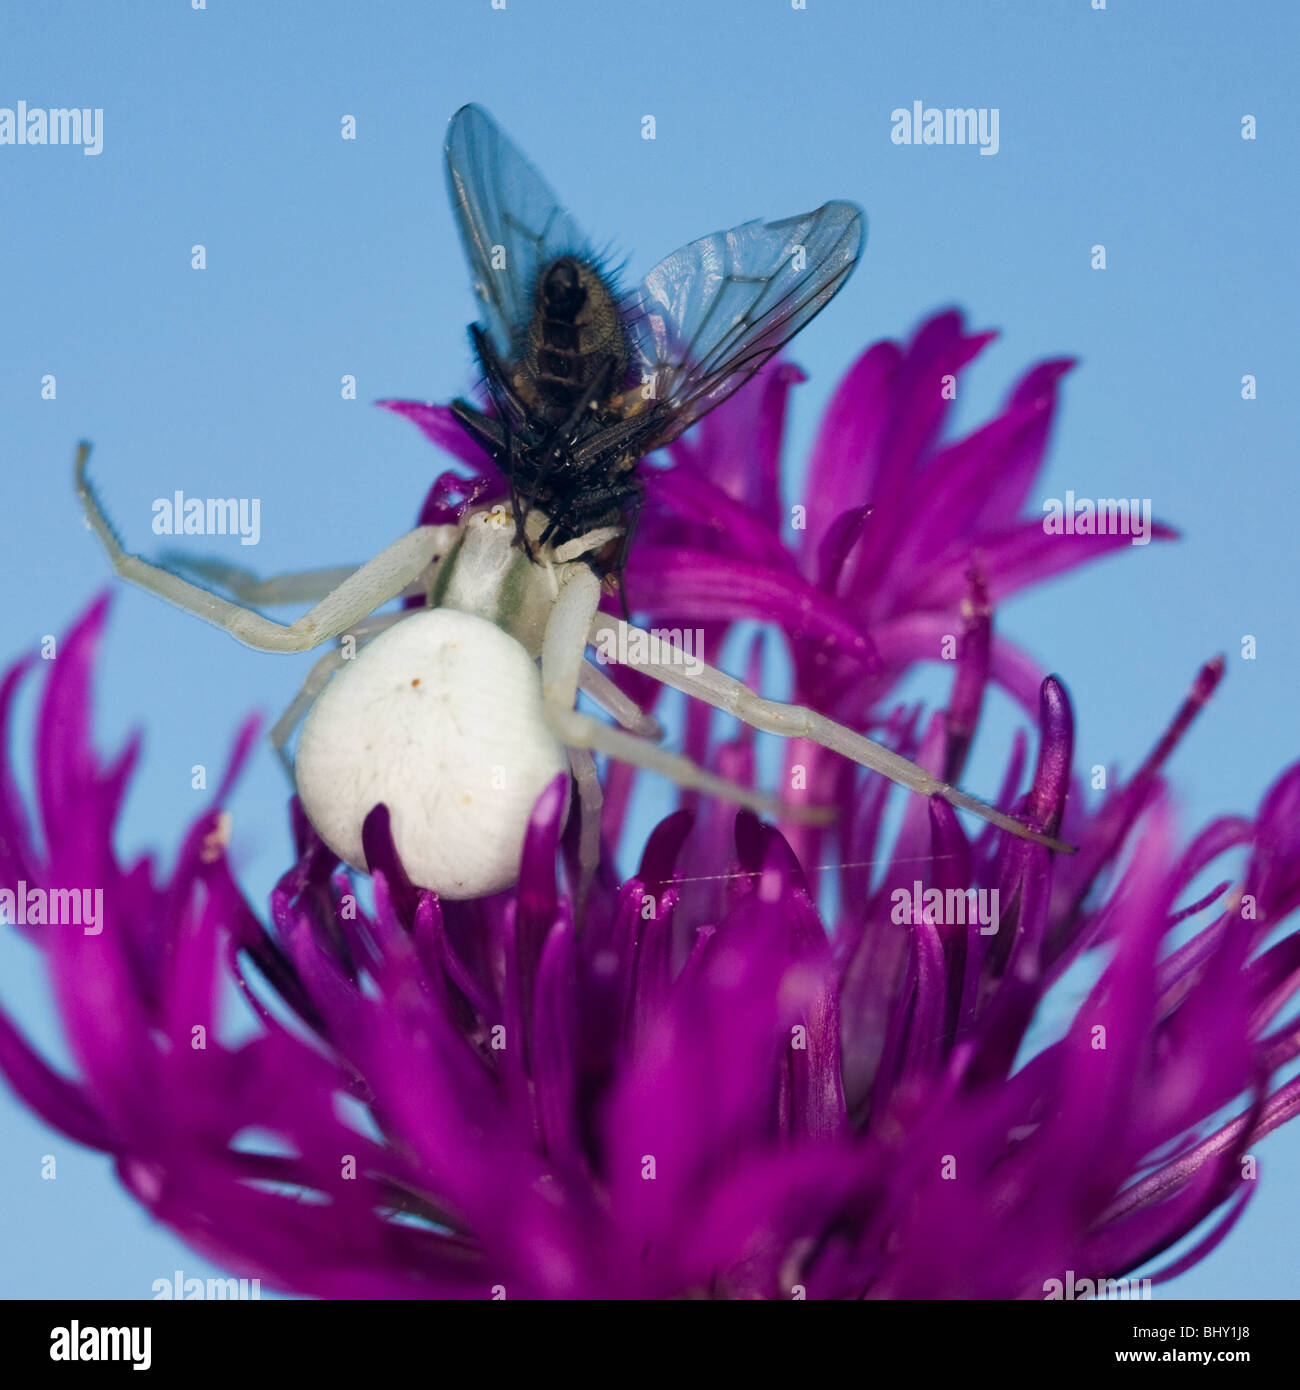 goldenrod crab spider (Misumenta vatia) Stock Photo